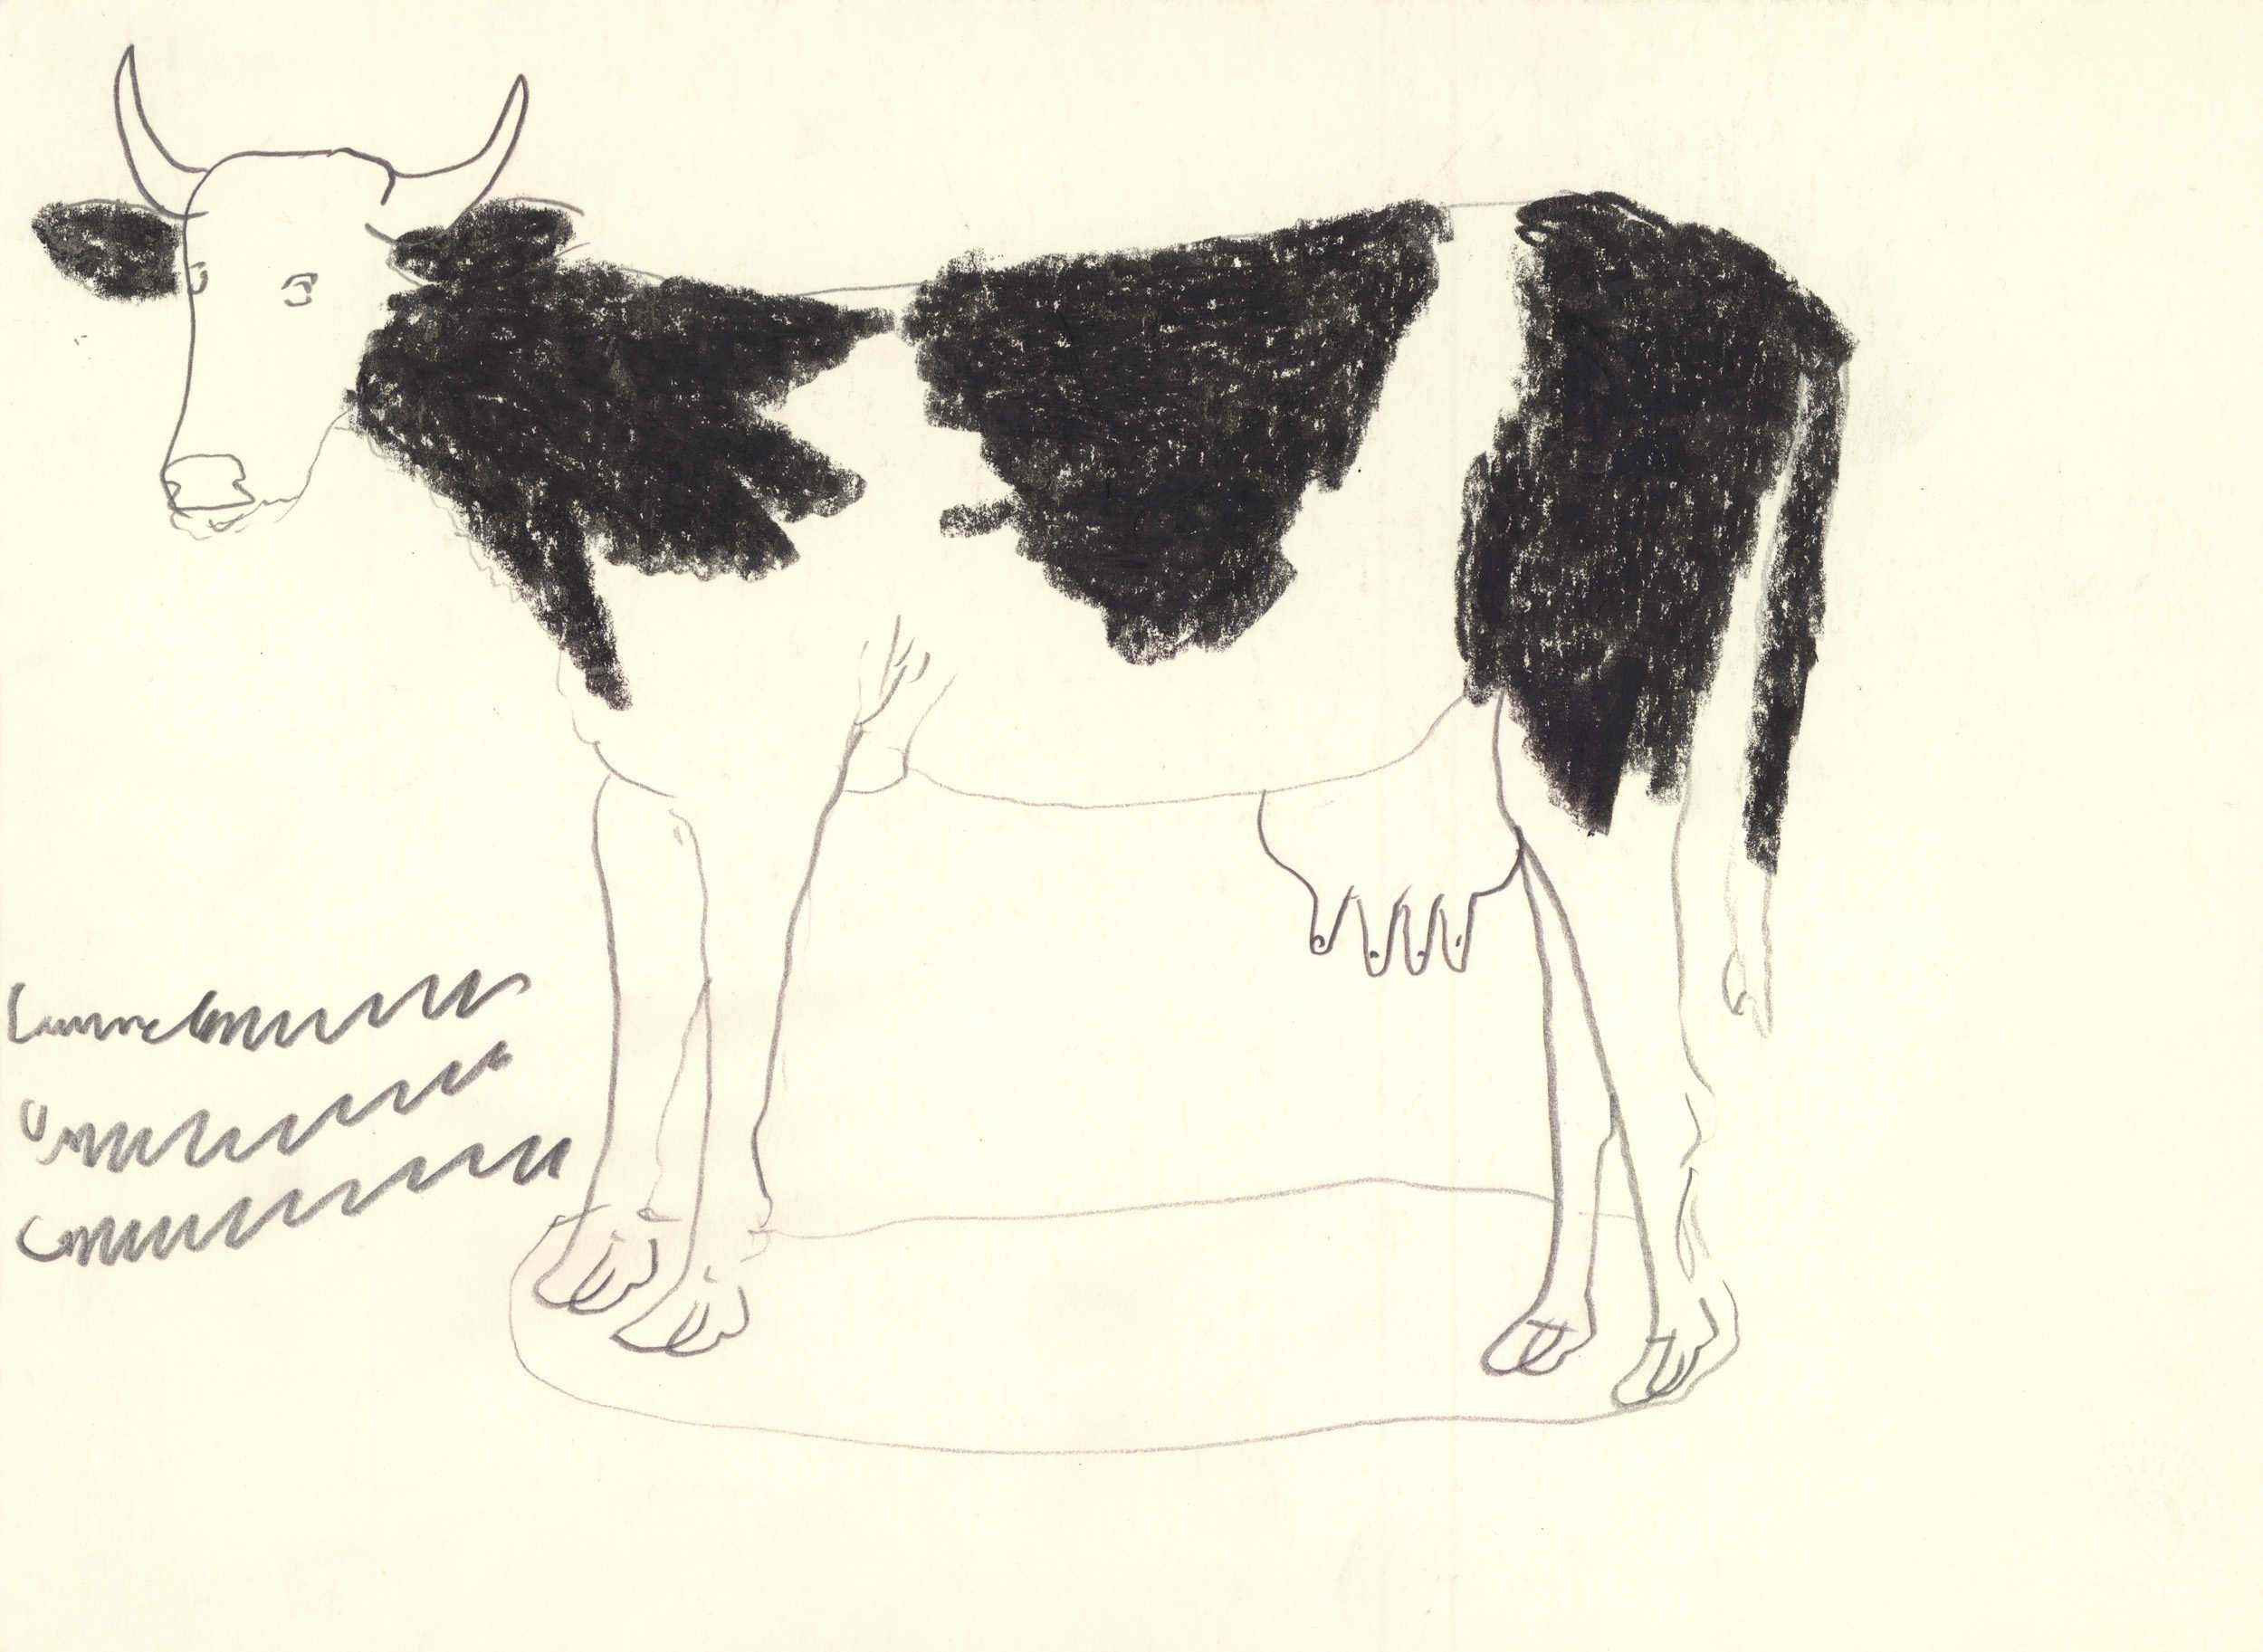 kamlander franz - Kuh / Cow